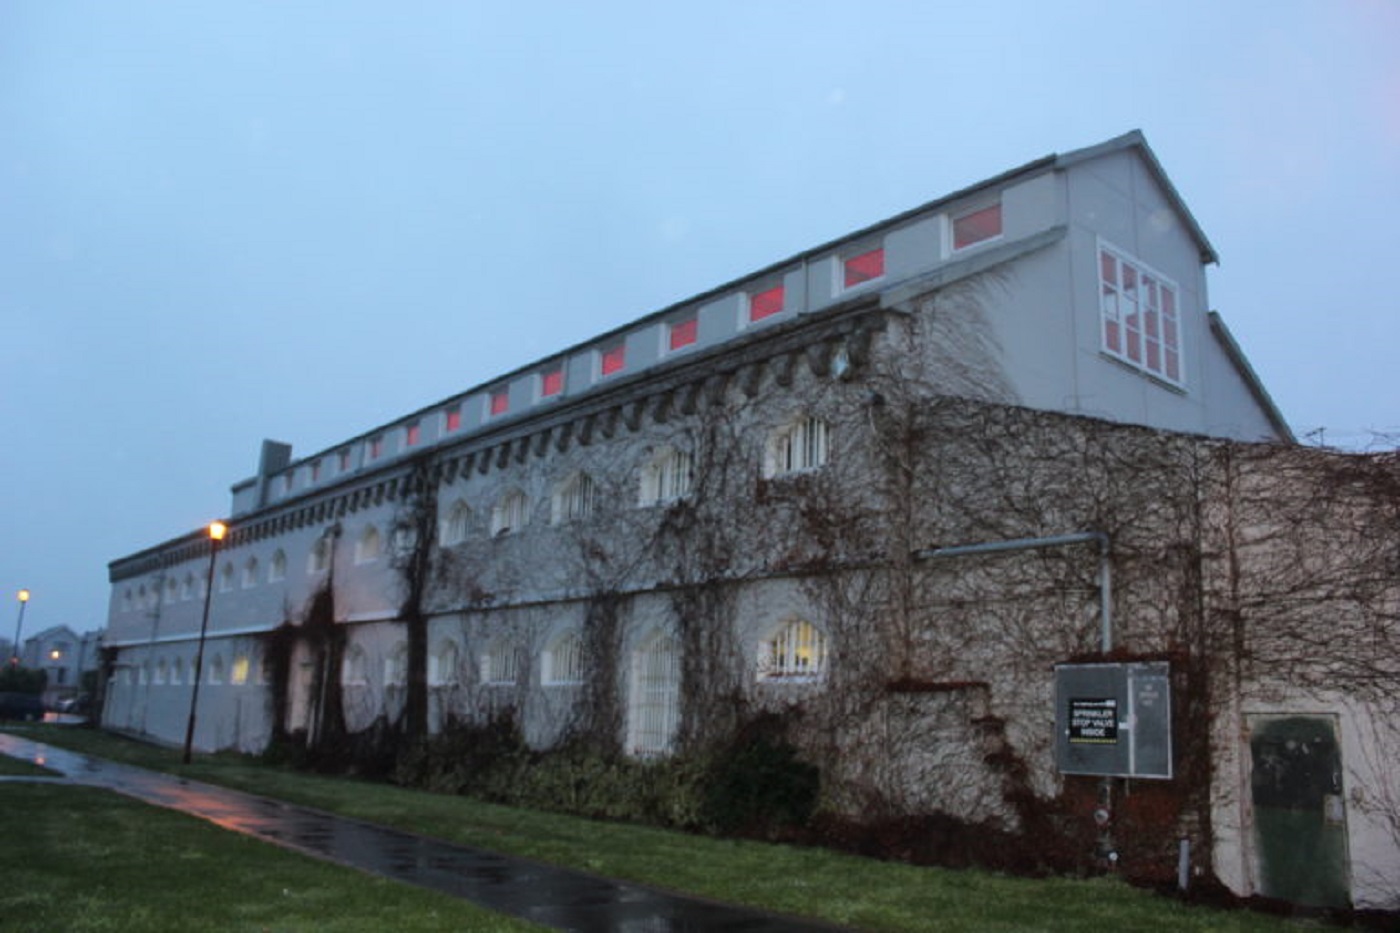  Jailhouse Accommodation (Foto: Tati Sisti)